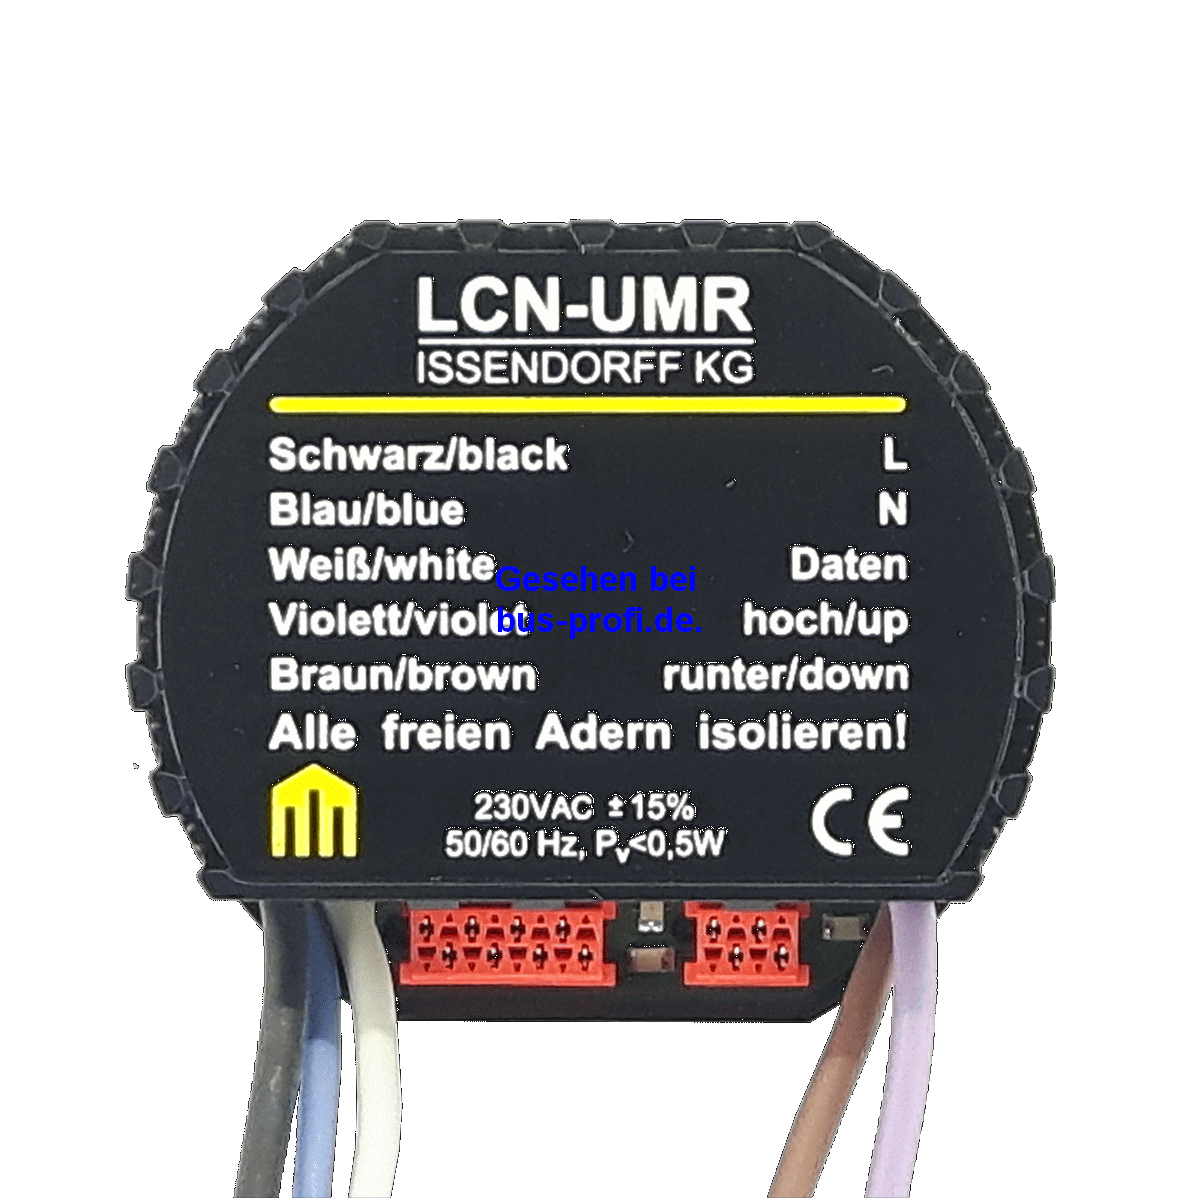 Issendorff LCN-UMR